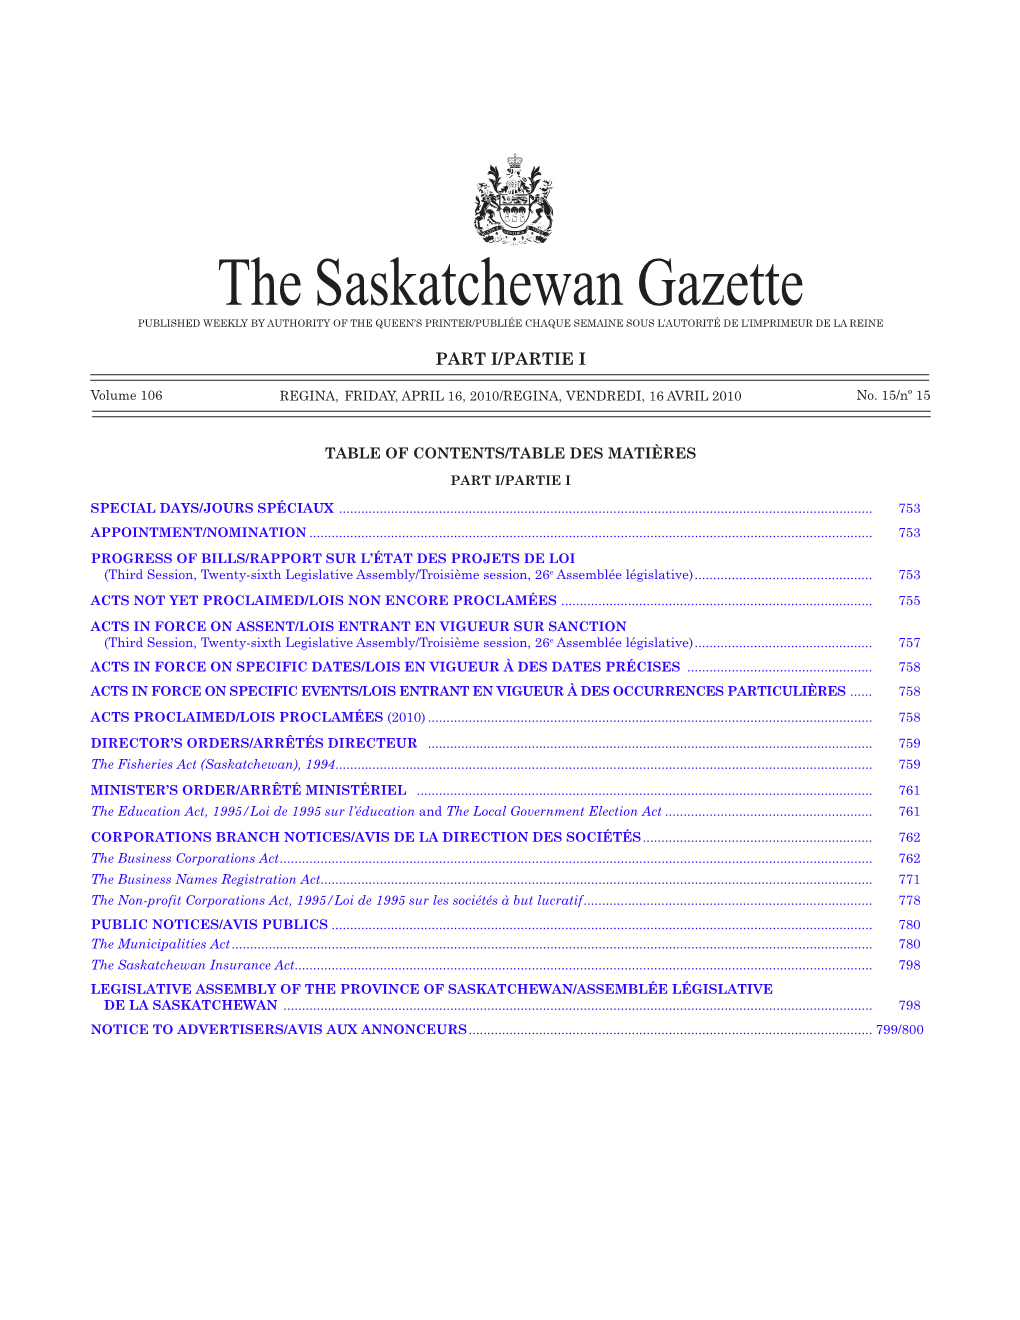 Sask Gazette, Part I, April 16, 2010